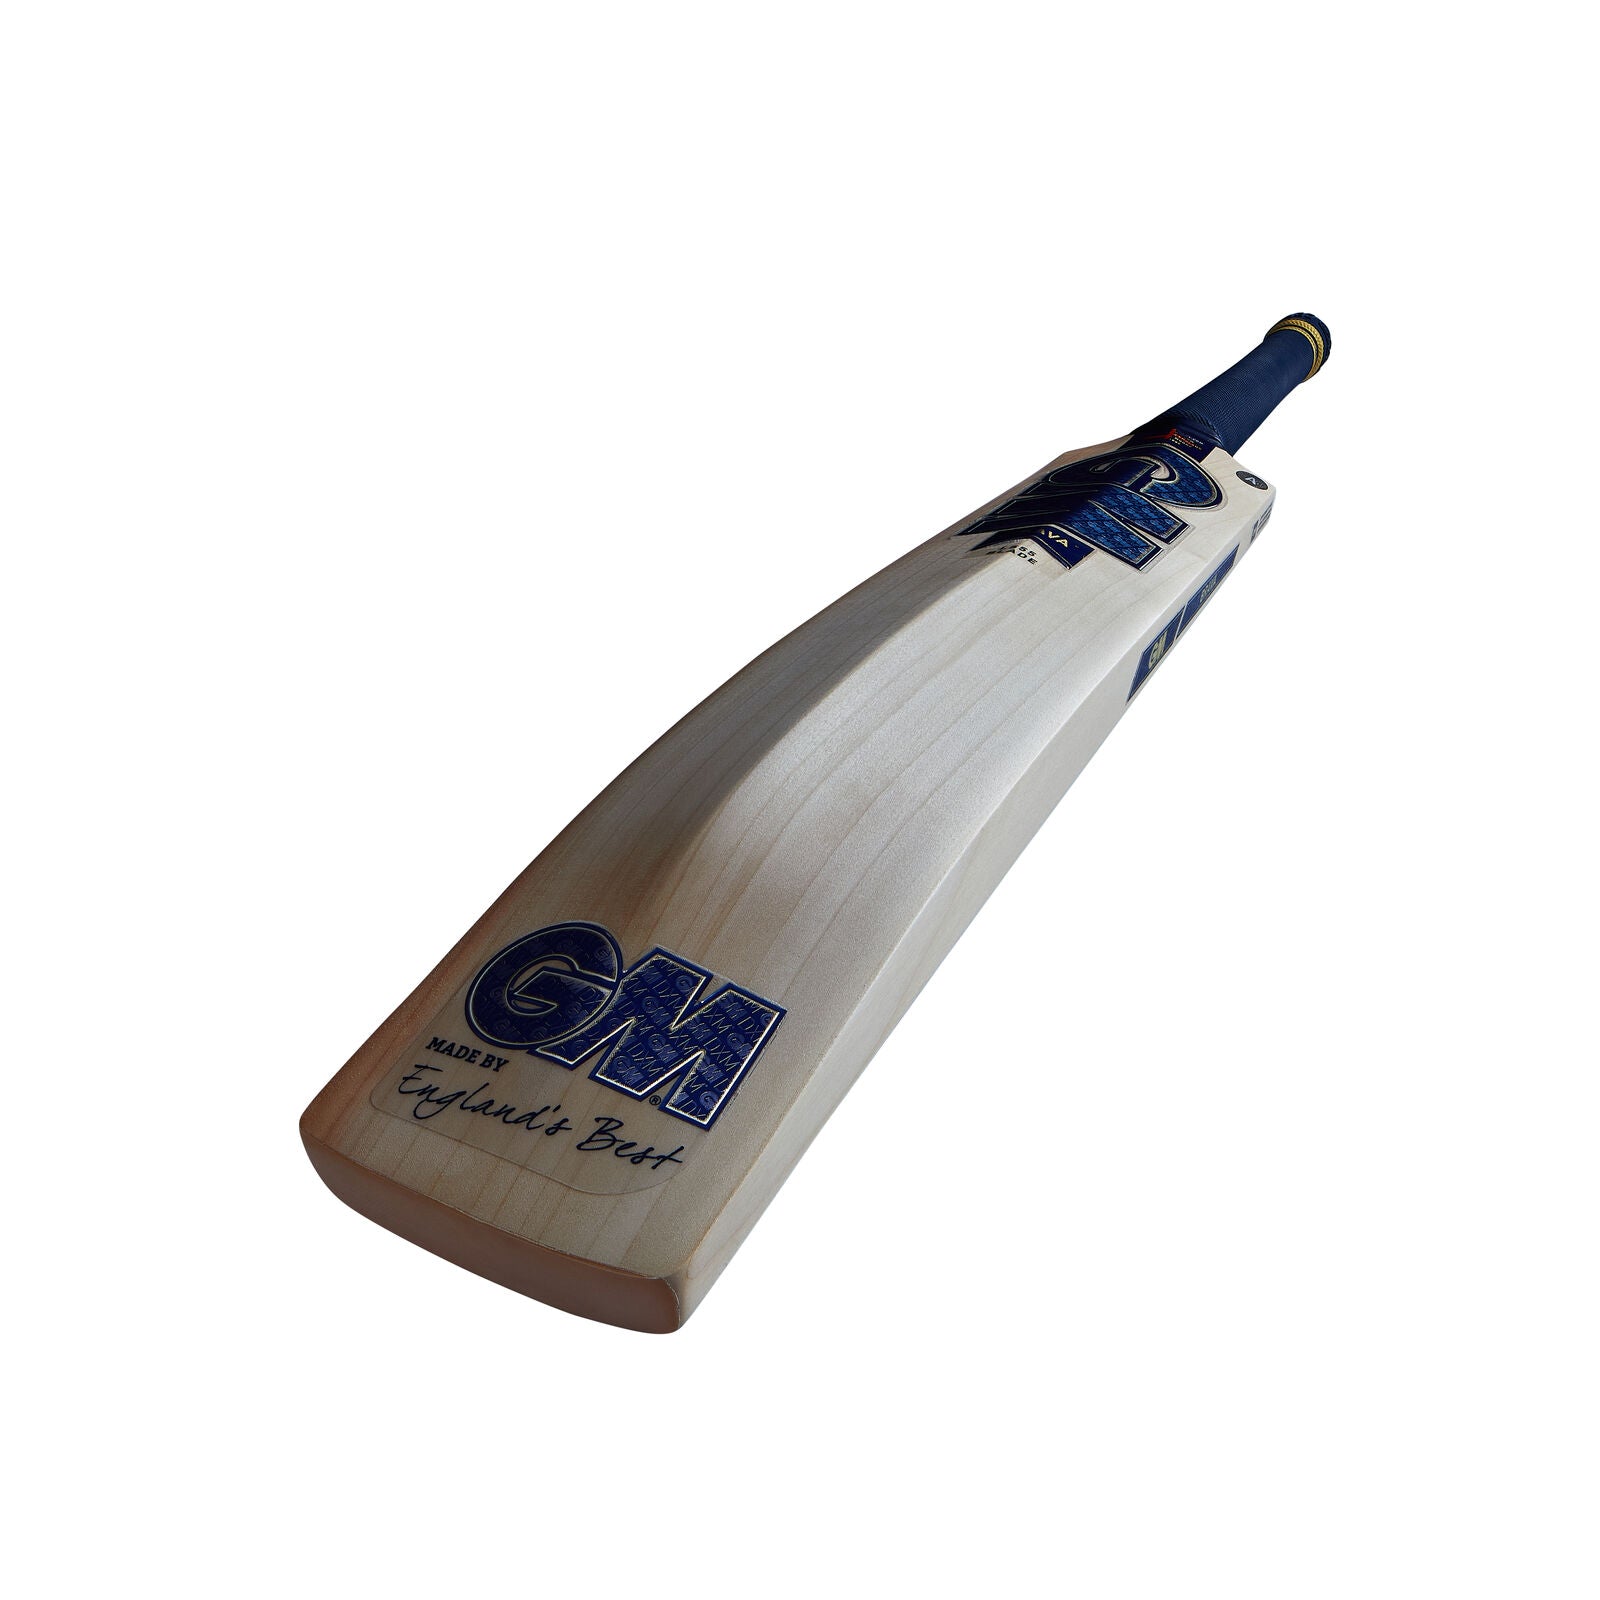 GM Brava DXM Signature English Willow Cricket Bat - 2024